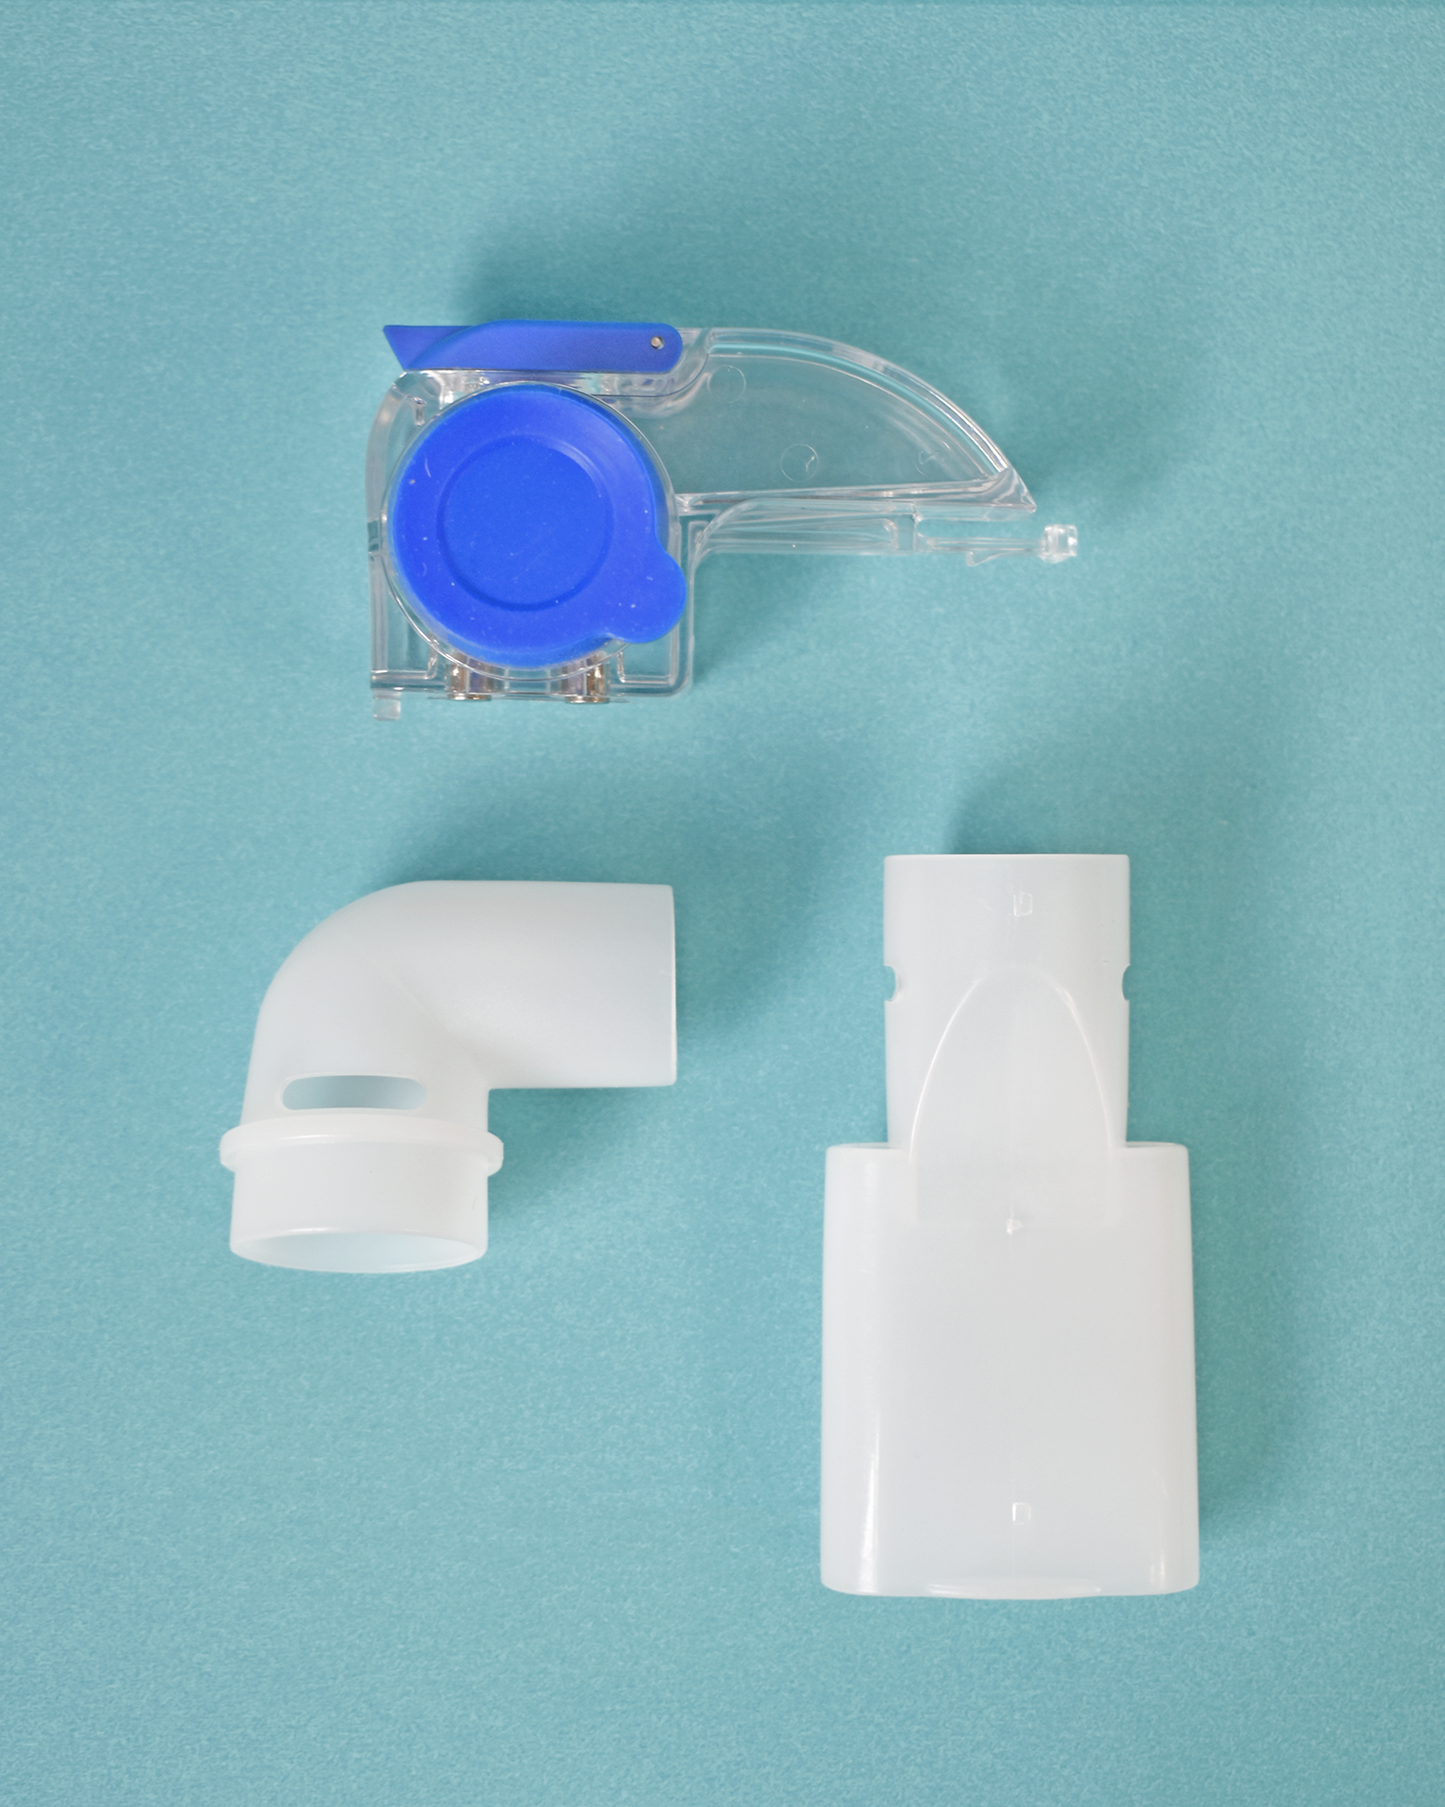 Electronic Vibrating Pocket Mesh Nebulizer Medication Cup, Mouthpiece, and Mask Adapter